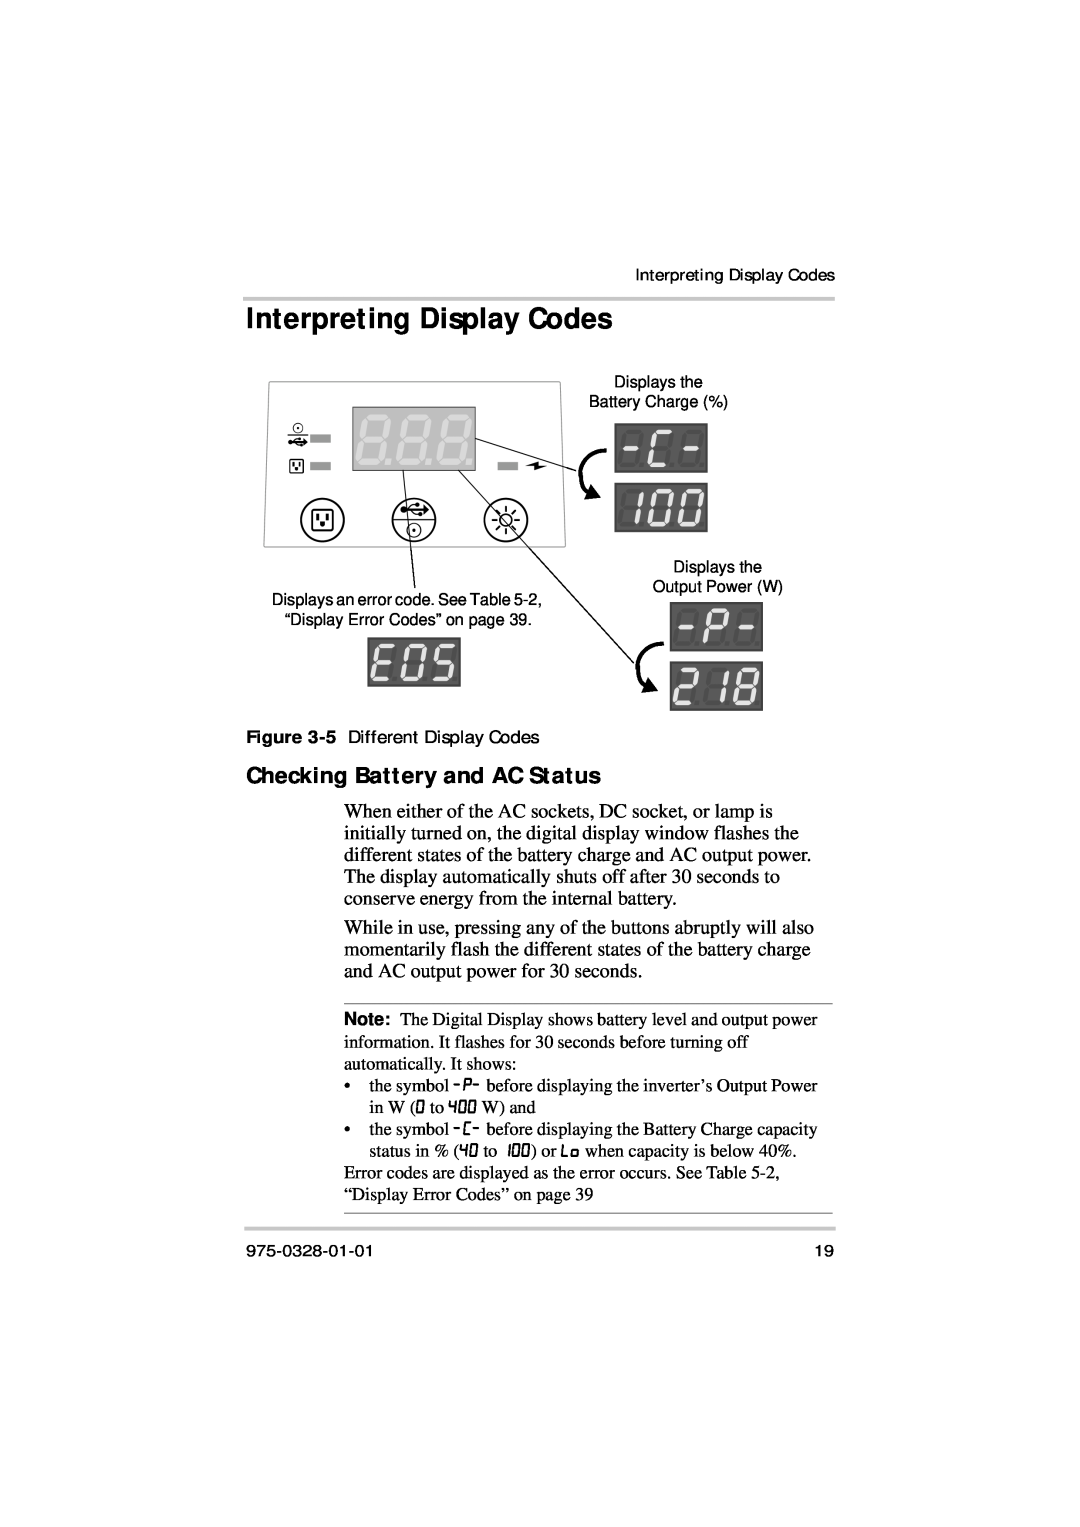 Xantrex Technology Solar 400 manual Interpreting Display Codes, Checking Battery and AC Status 